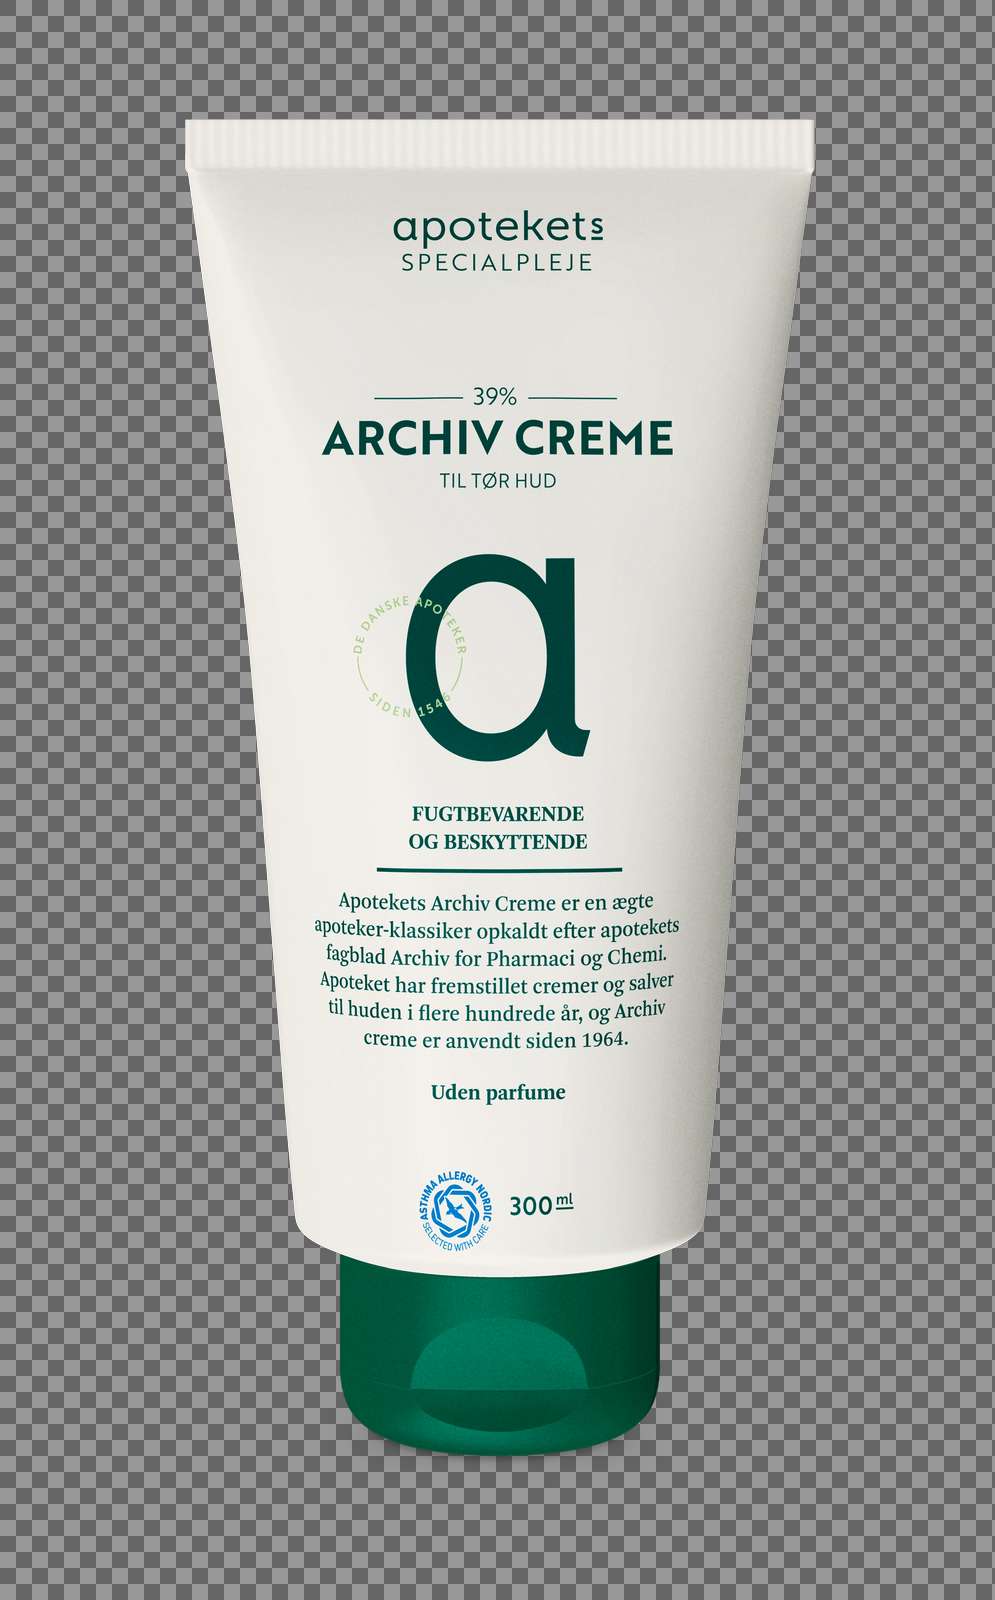 Archiv-creme-300ml-apotekets.psd